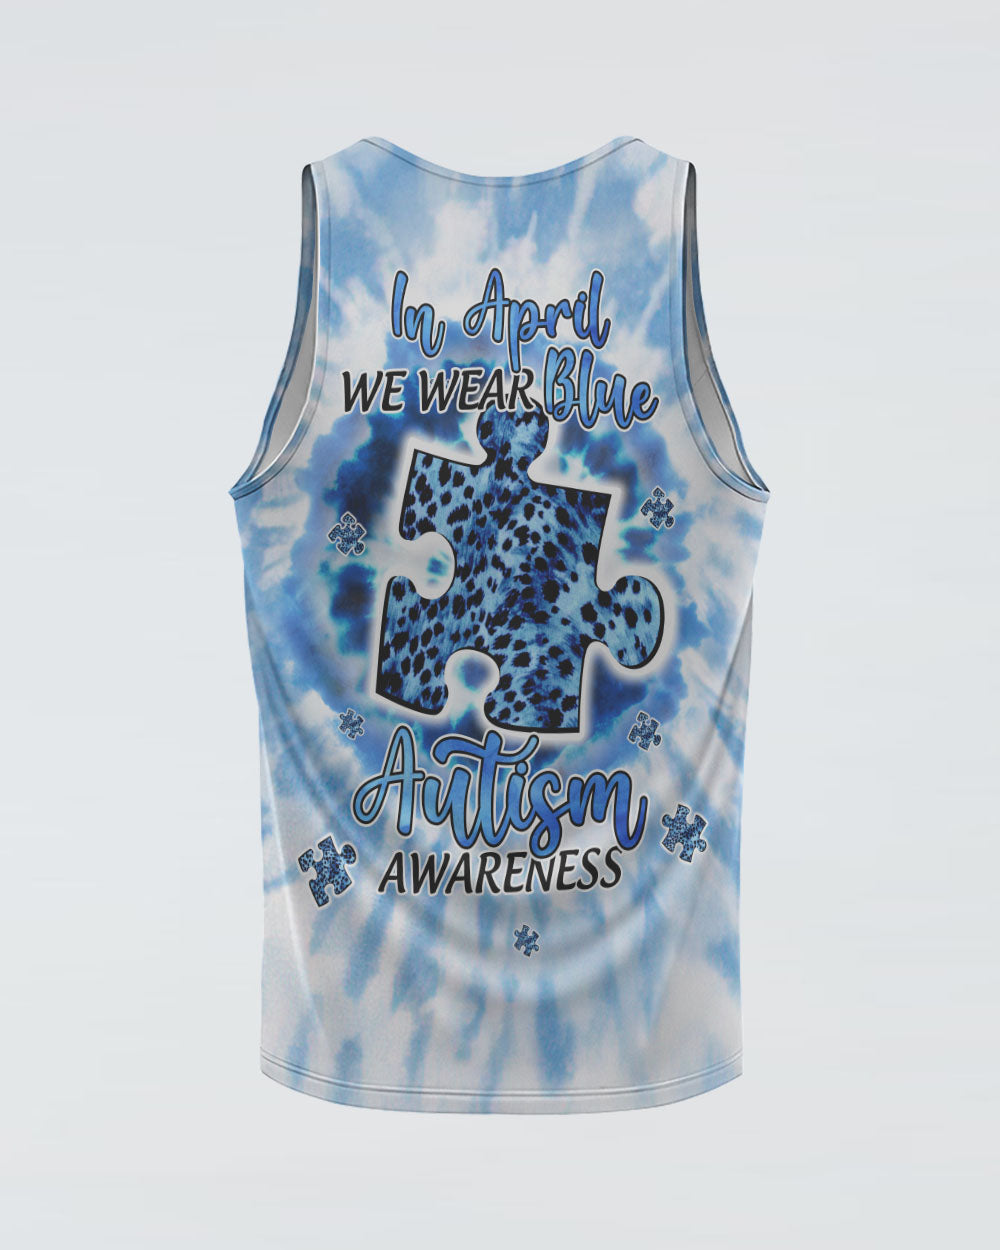 In April We Wear Blue Women's Autism Awareness Tanks